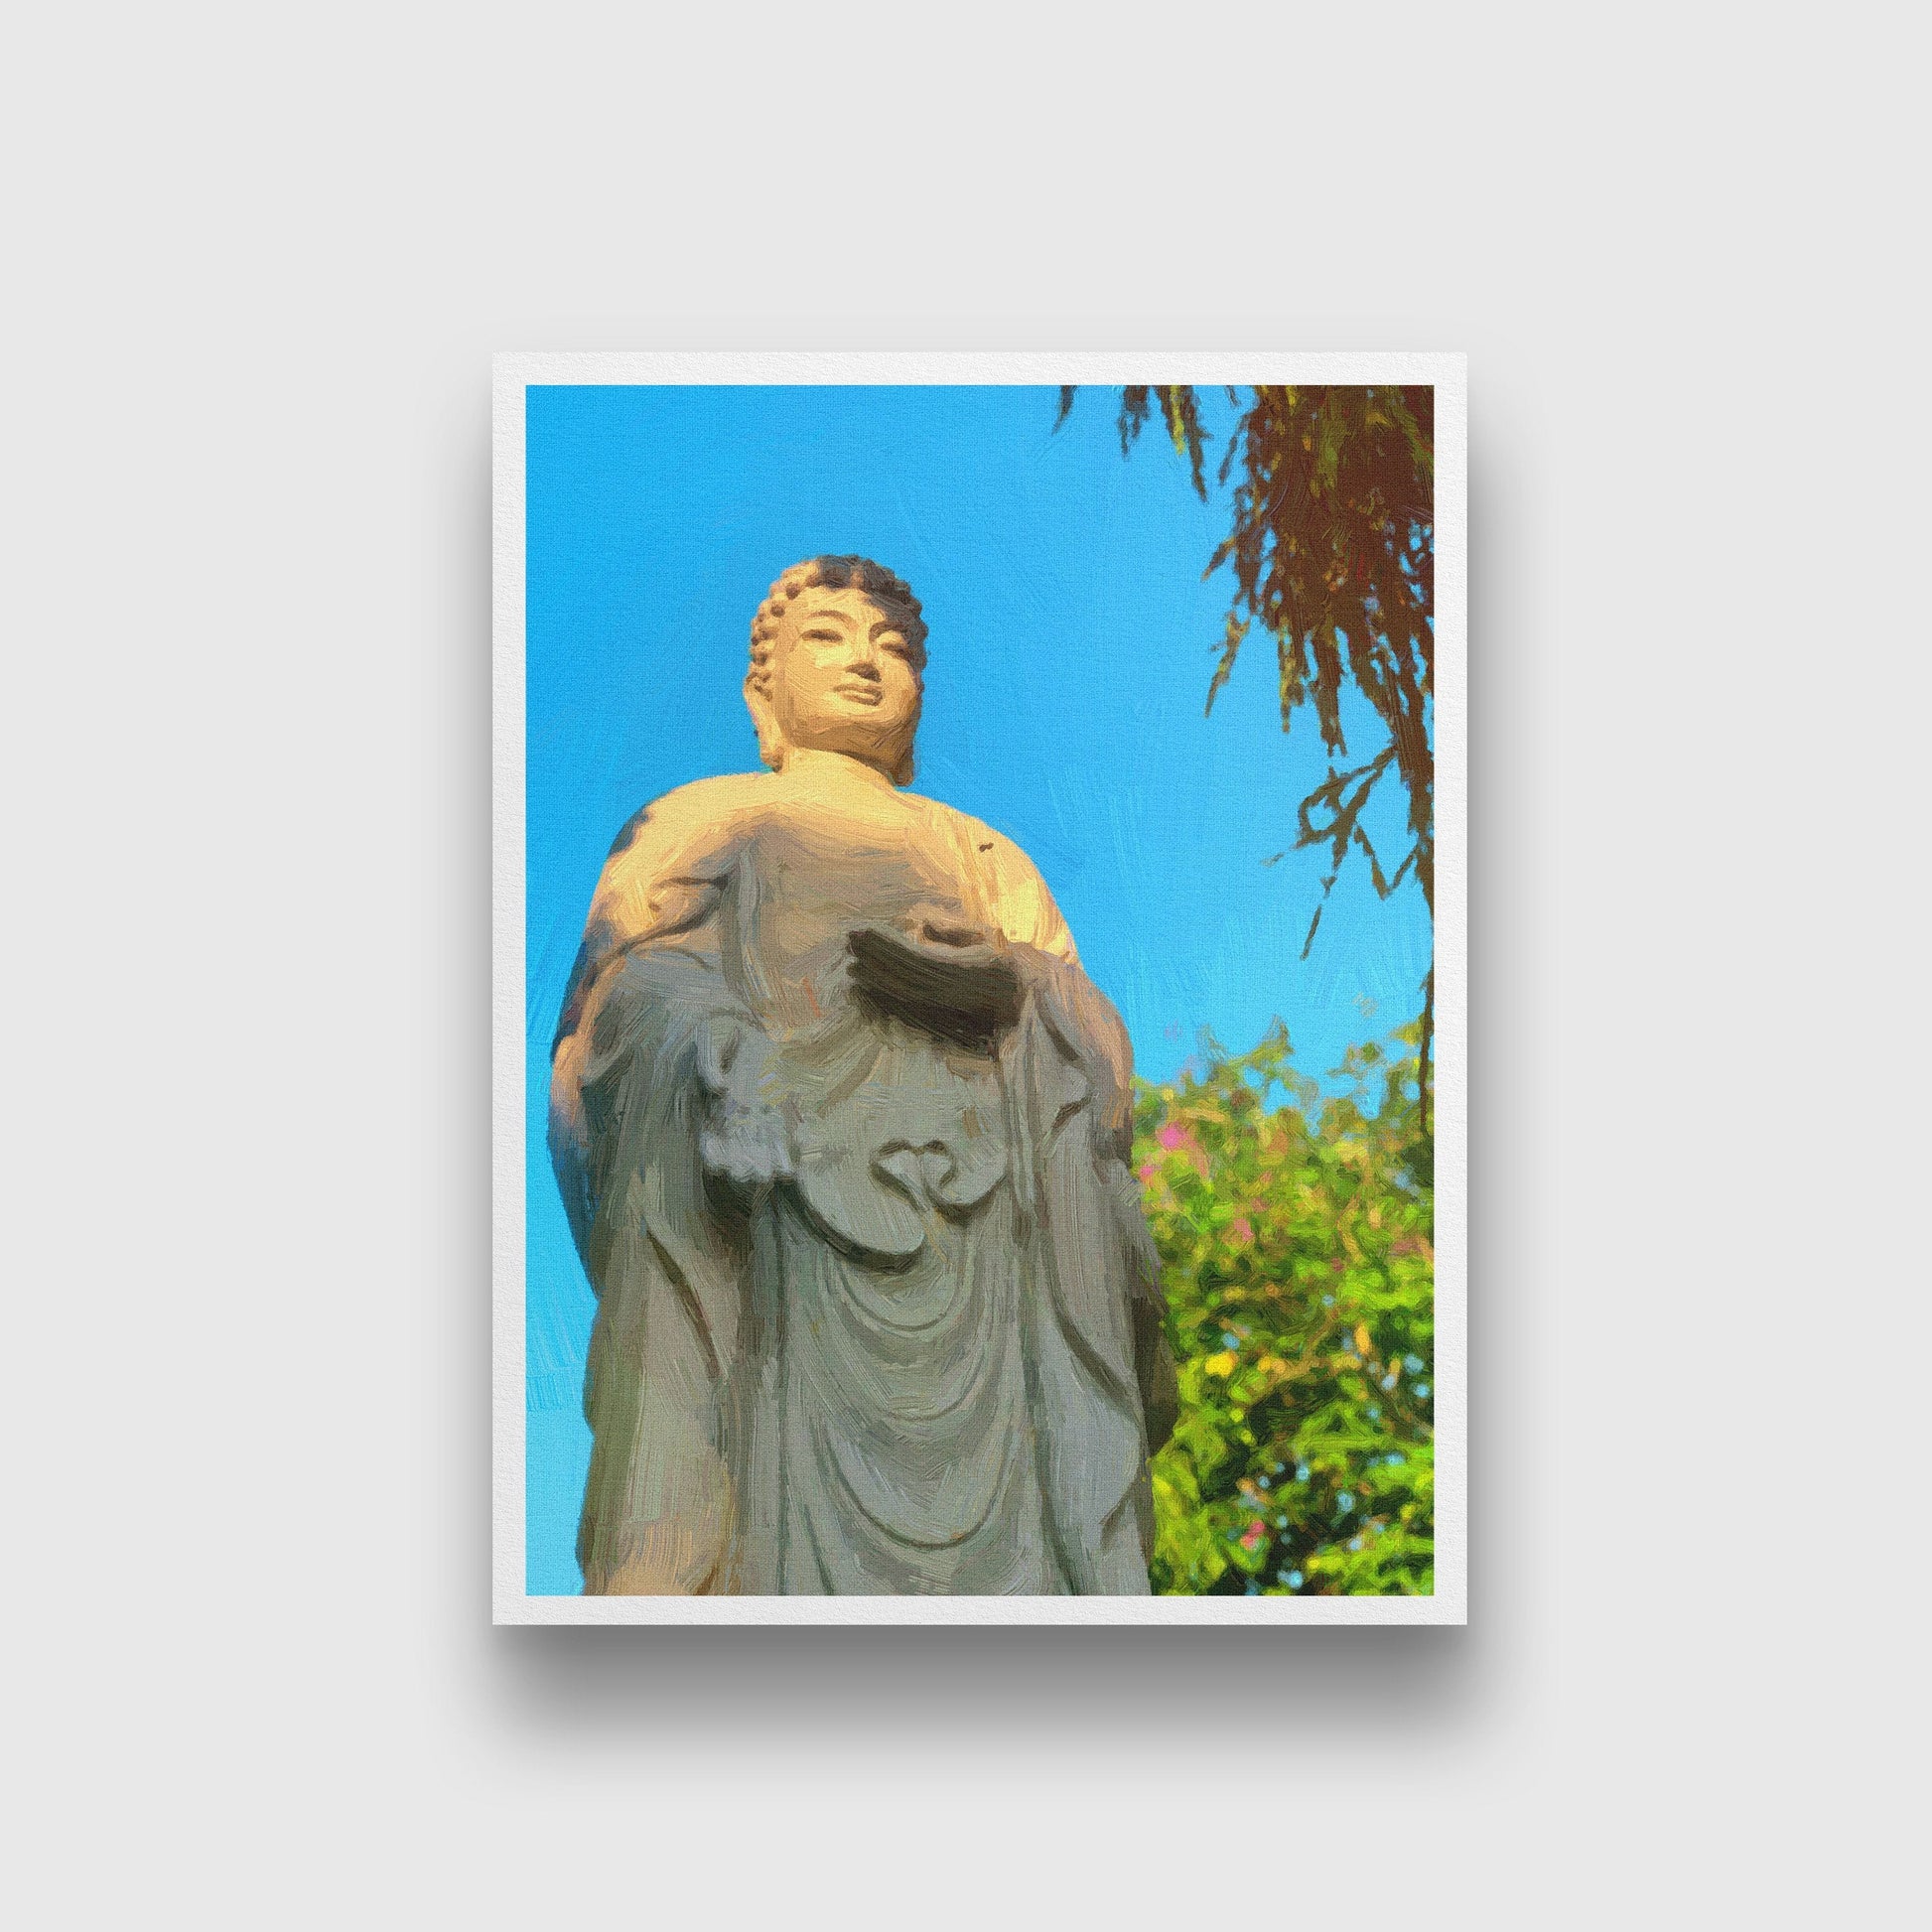 The large standing buddha statue Painting - Meri Deewar - MeriDeewar